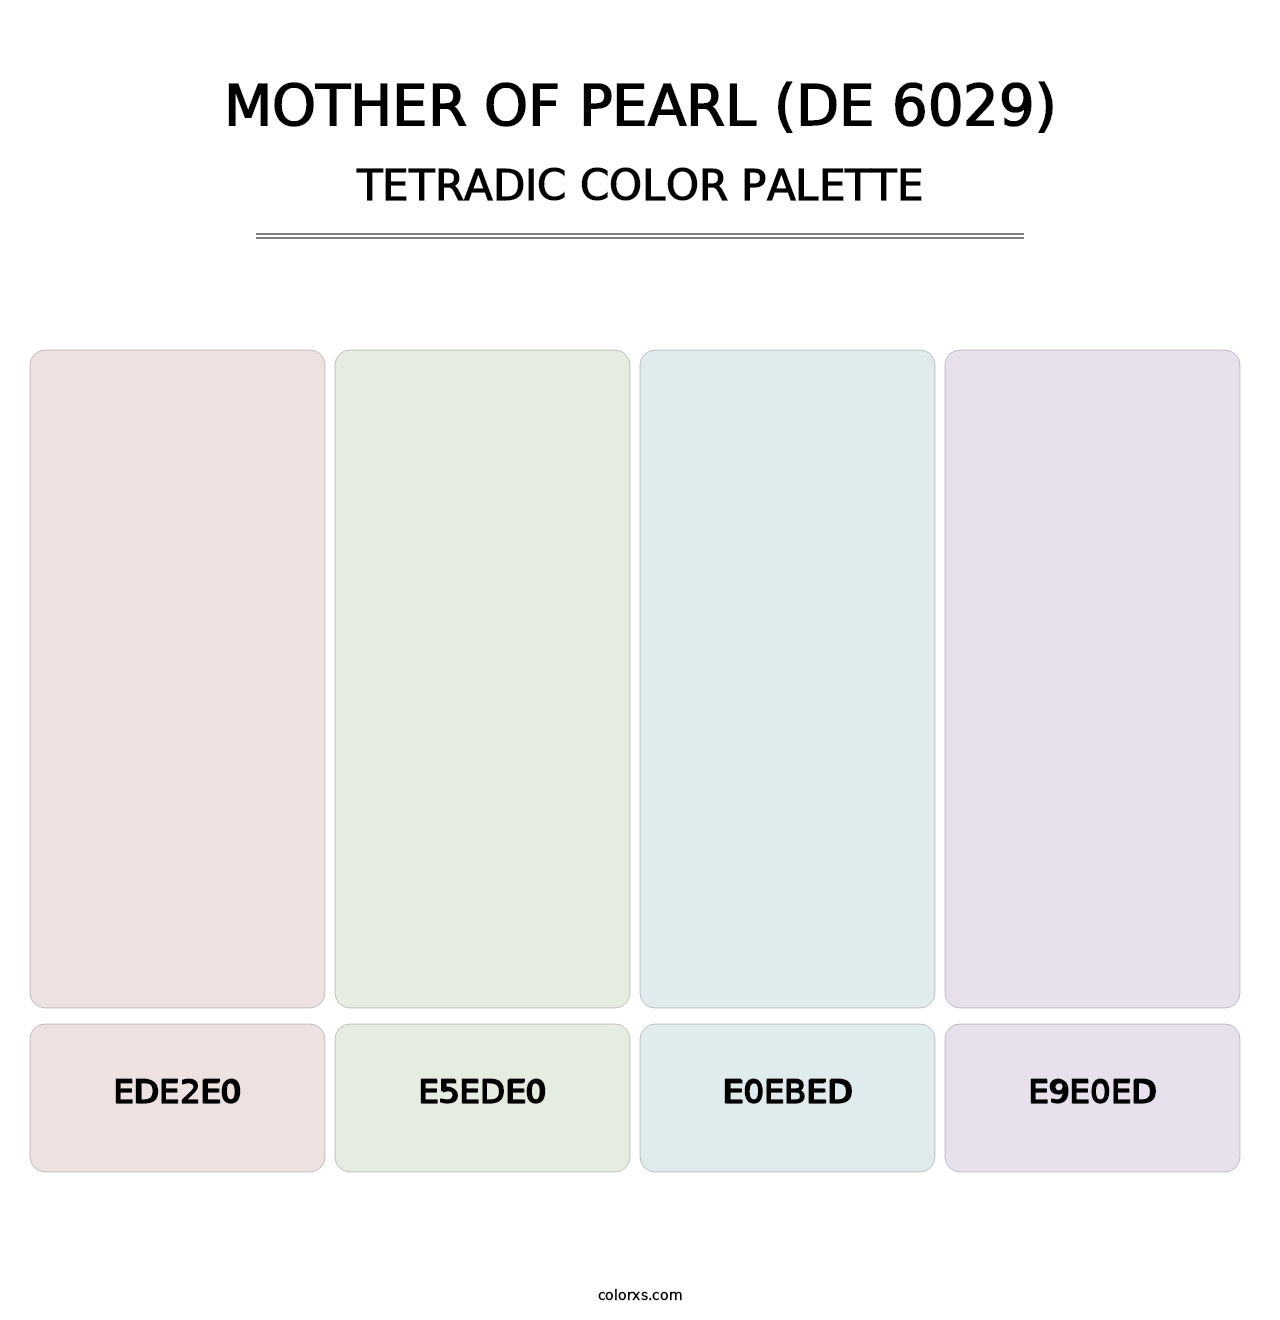 Mother of Pearl (DE 6029) - Tetradic Color Palette